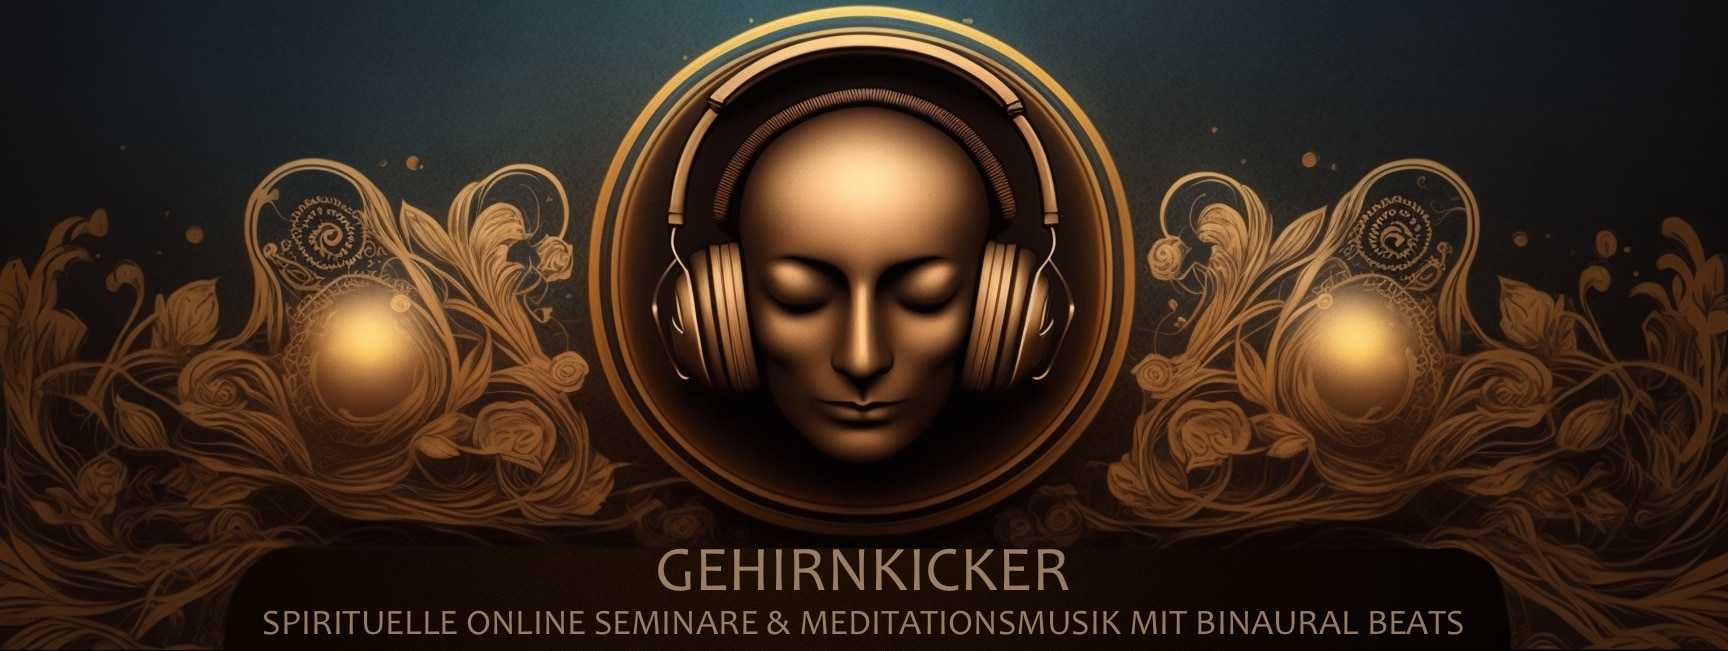 gehirnkicker - spirituelle onlineseminare meditationsmusik